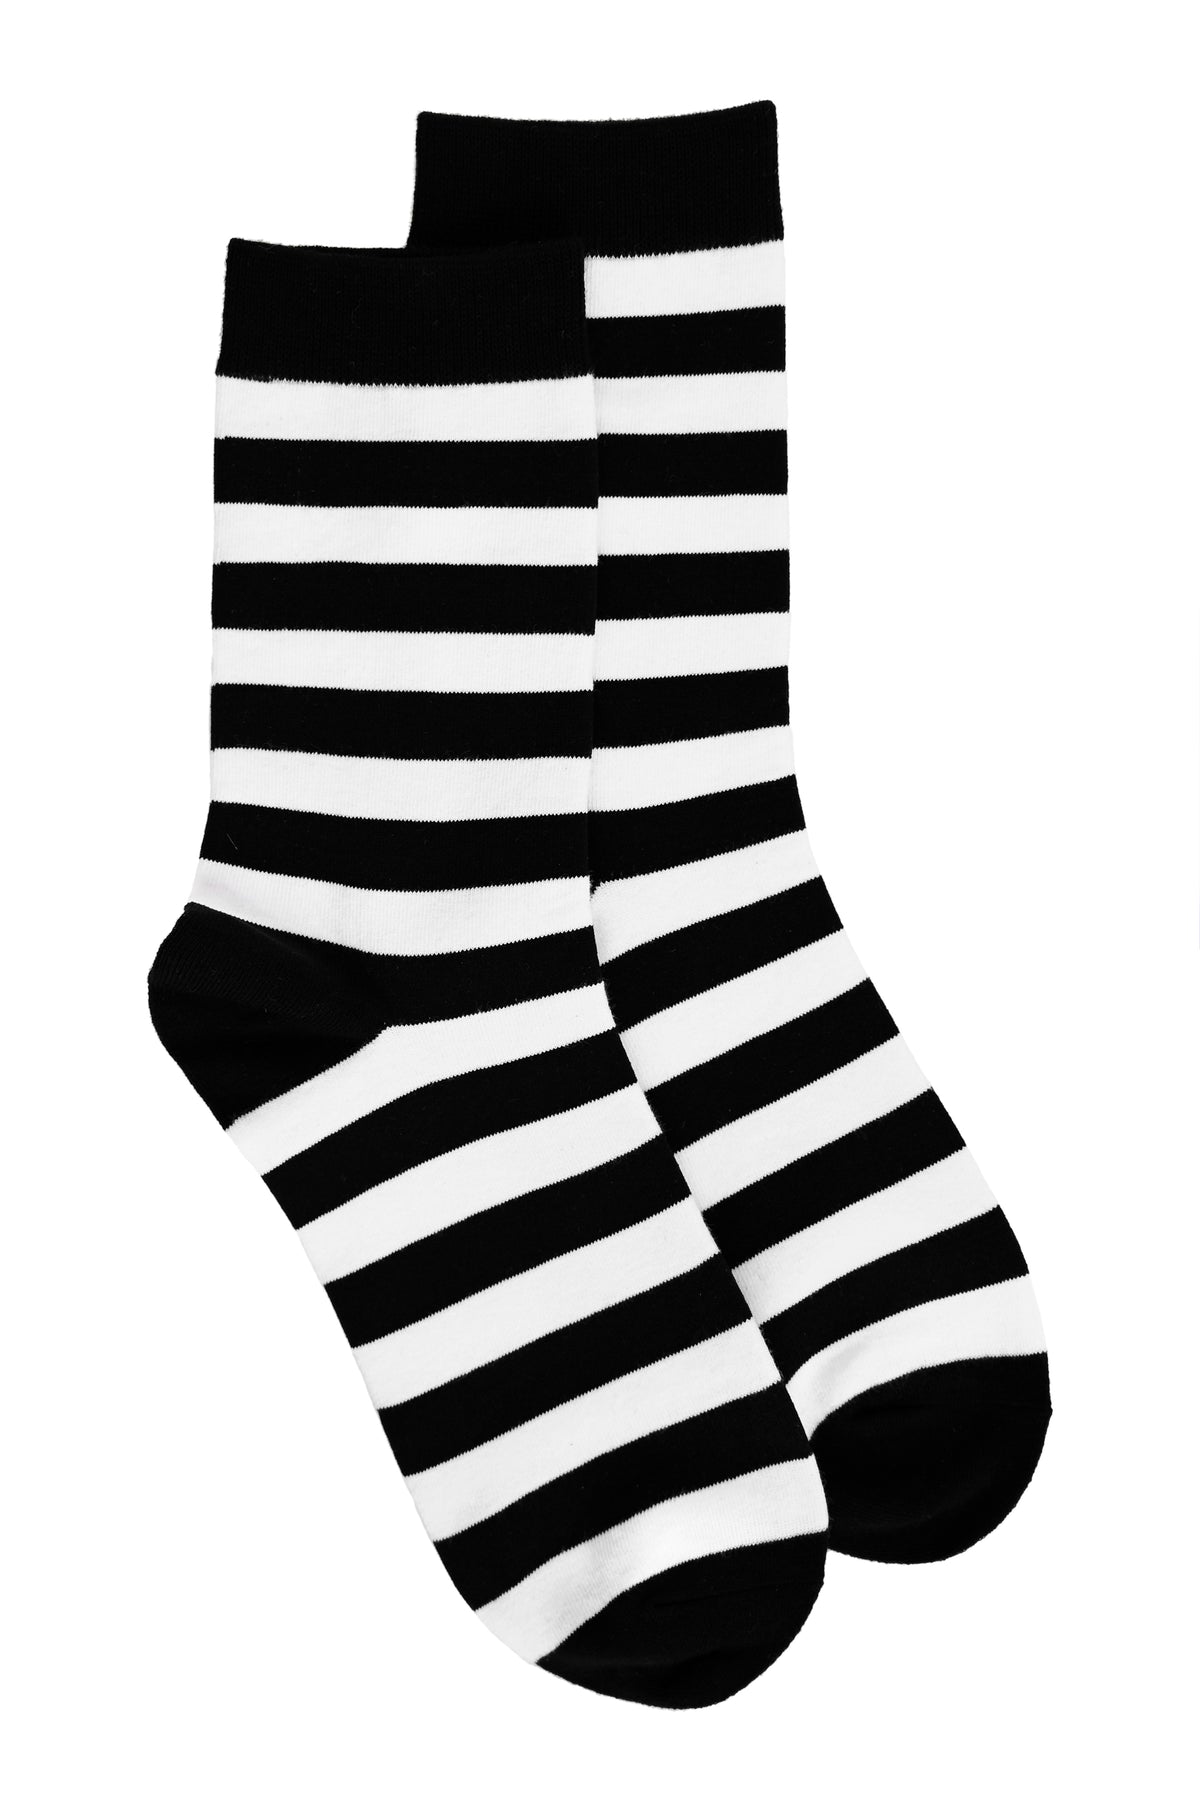 Lovett Horizontal Striped Socks